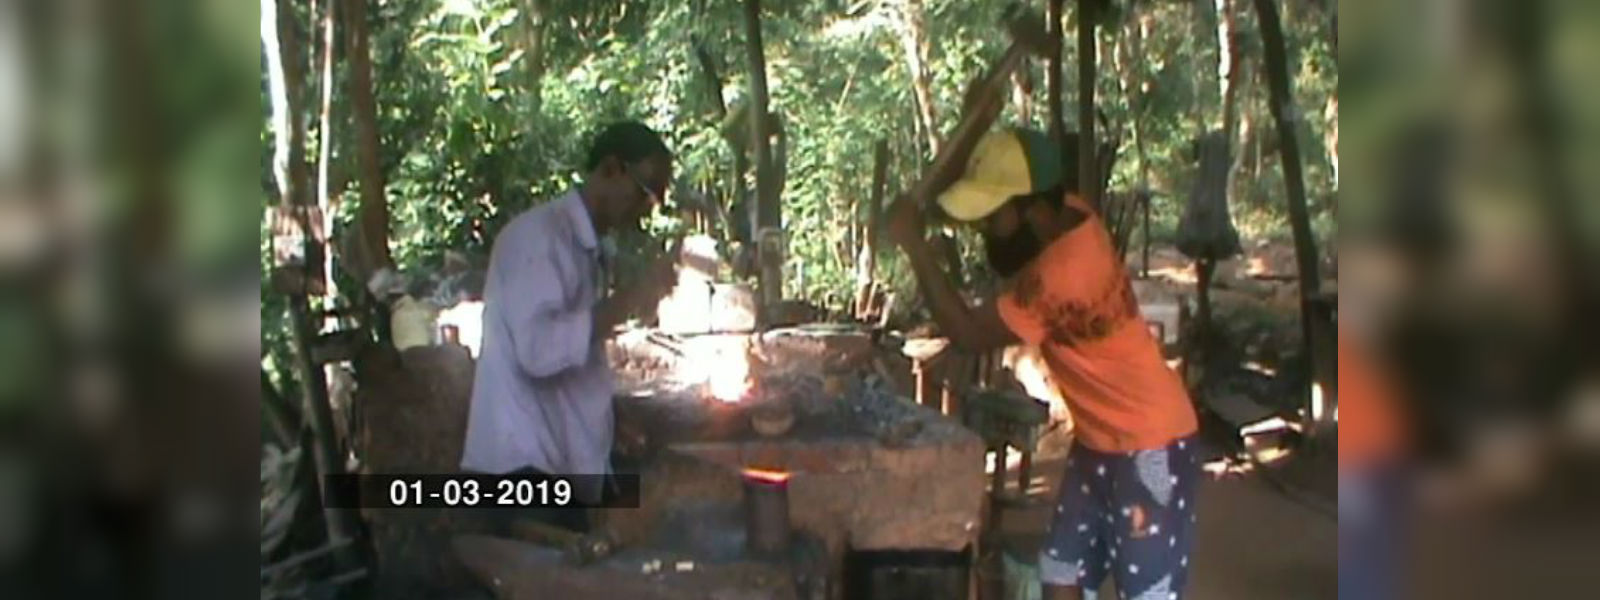 Bowathanna Watta blacksmith industry at risk